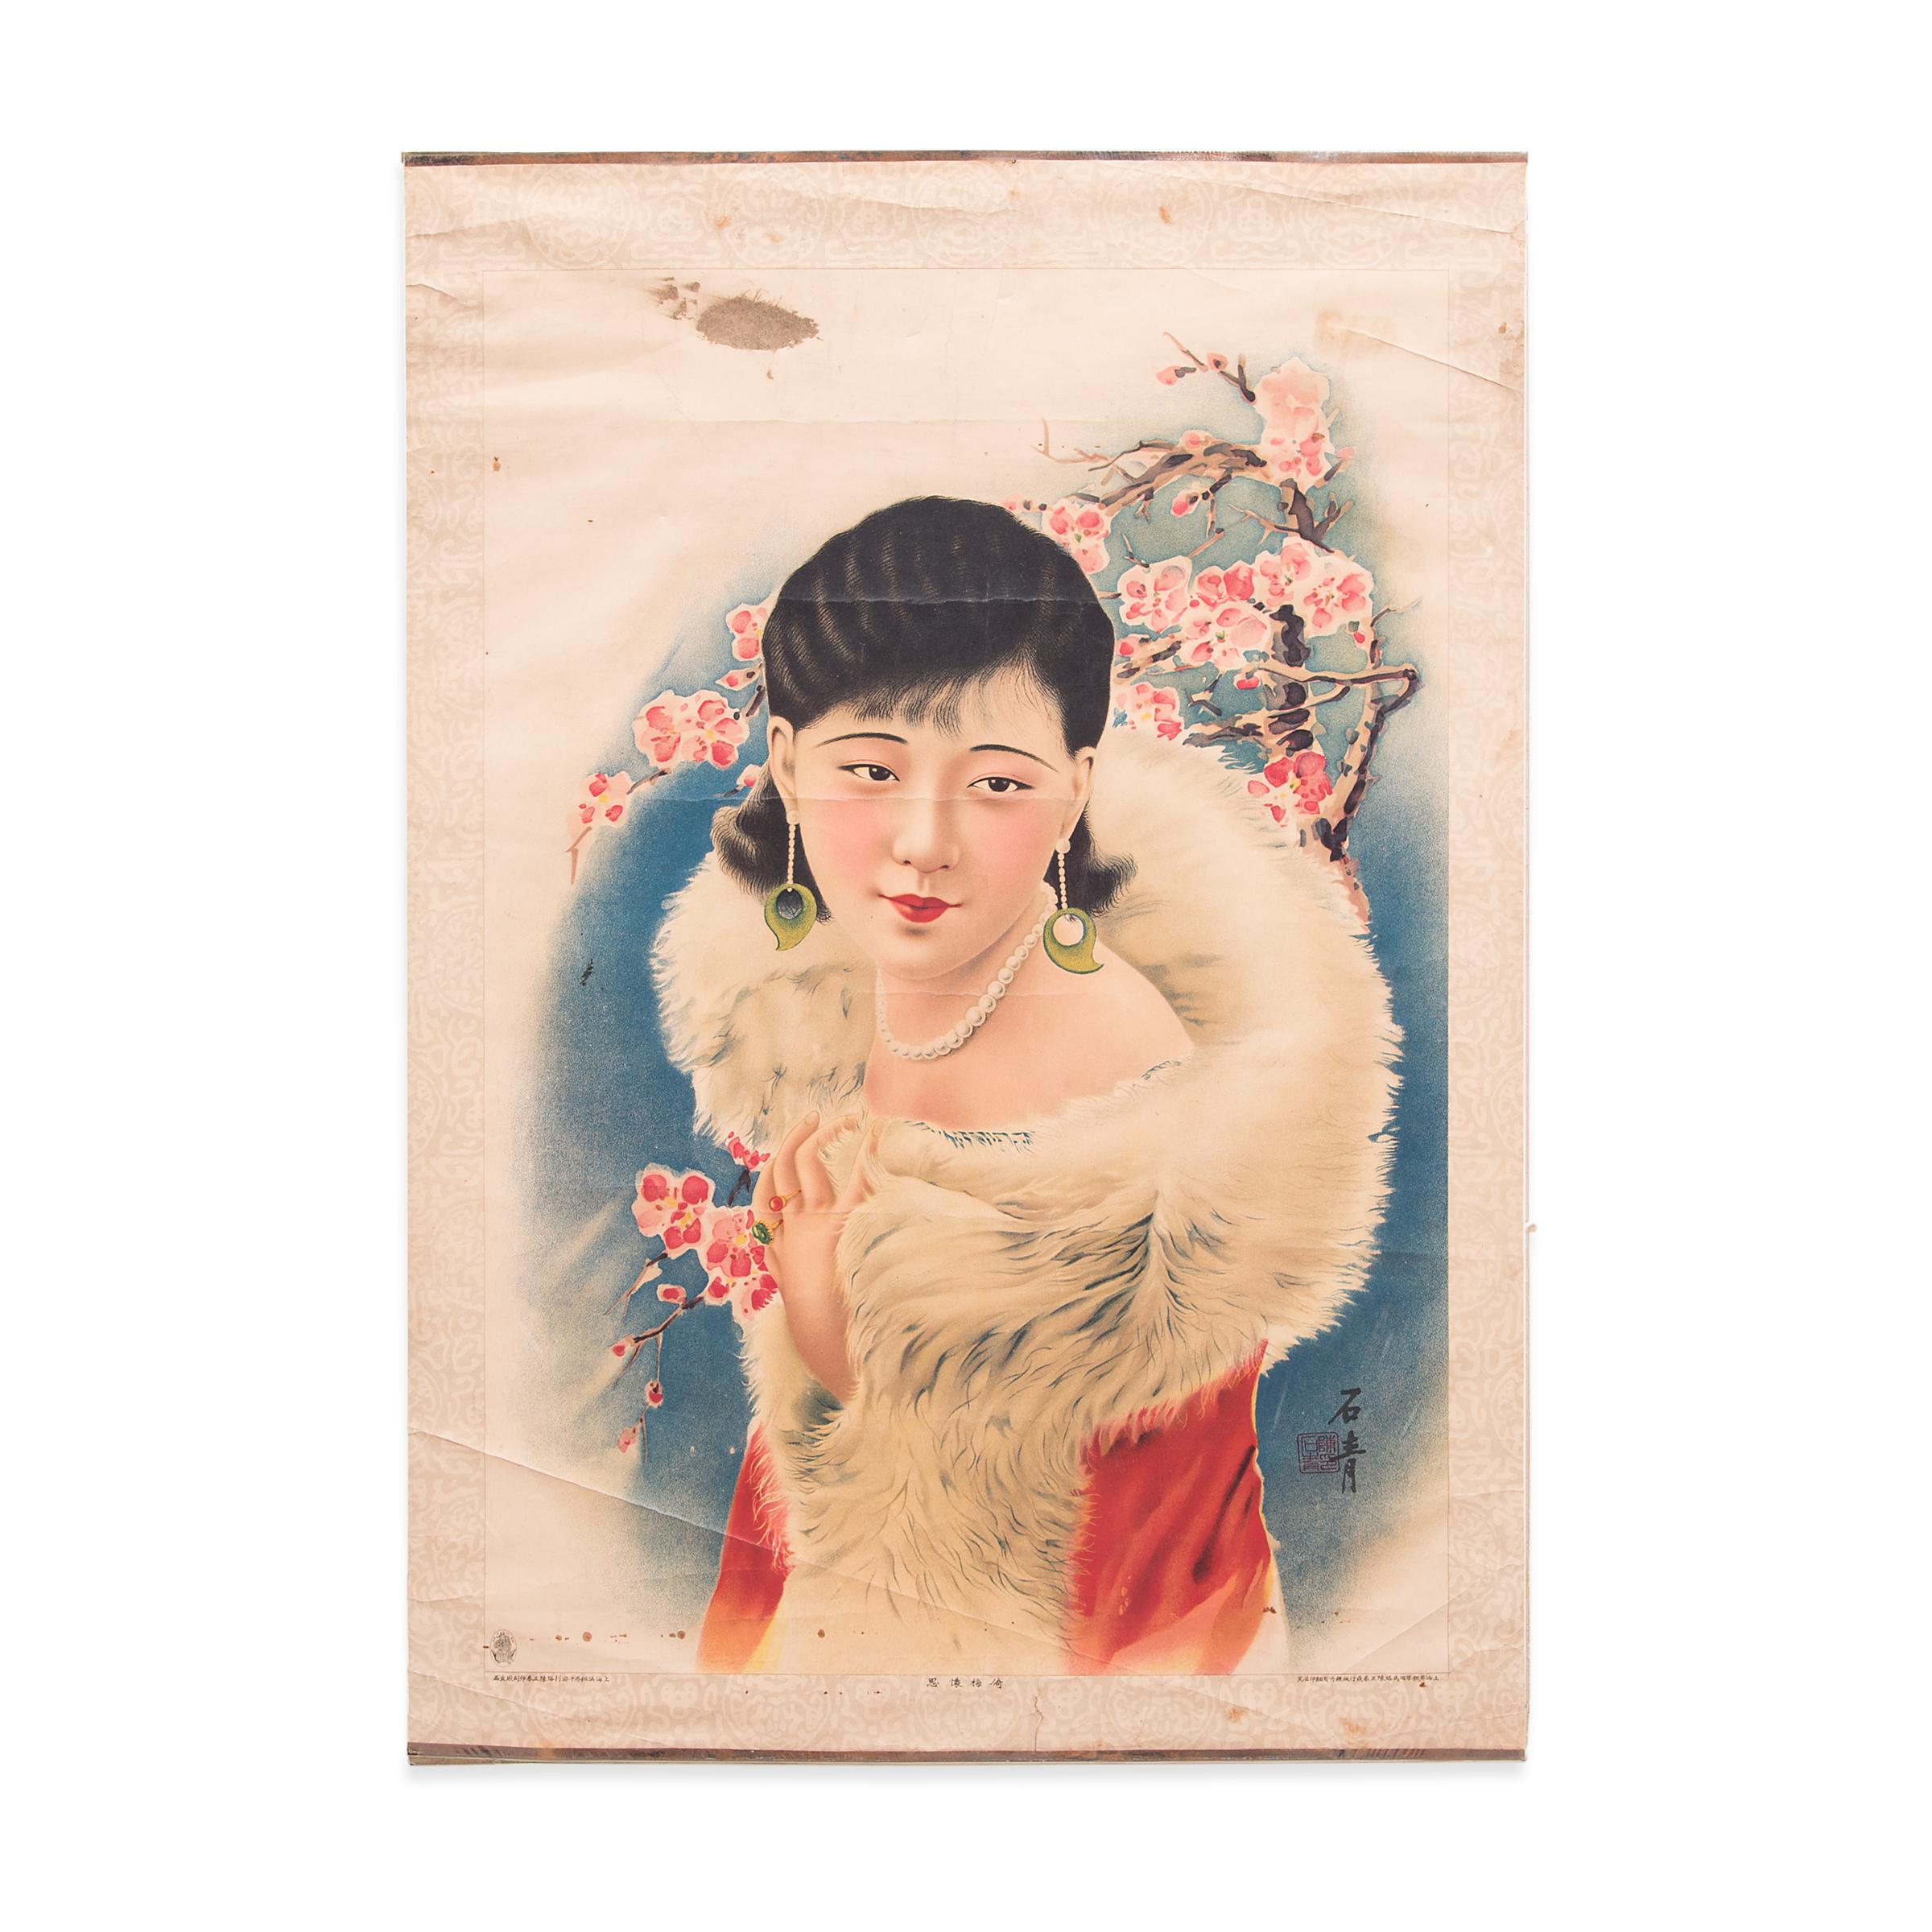 Figurative Print Unknown - Affiche publicitaire chinoise vintage, vers 1930